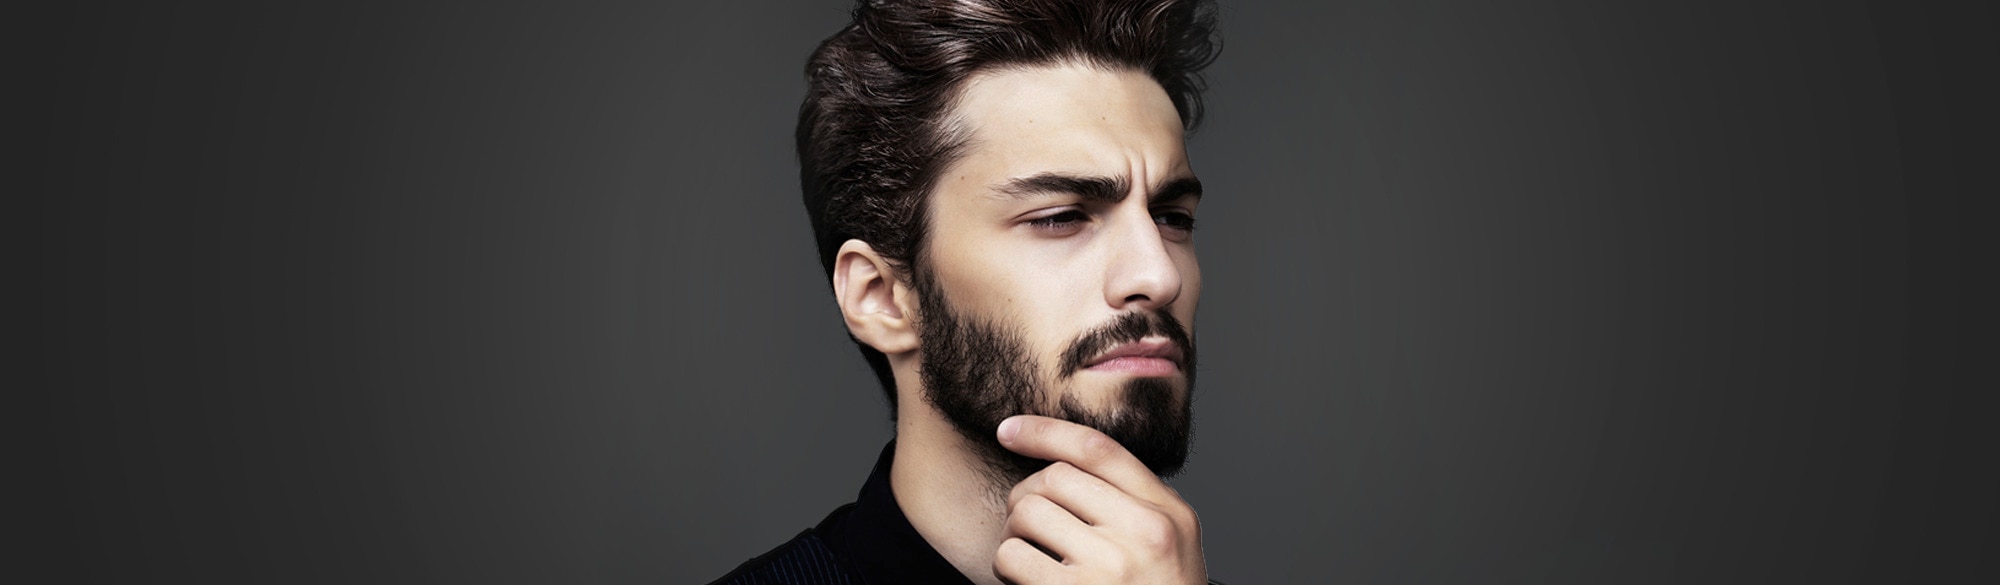 Descamando o couro cabeludo: causas e tratamento